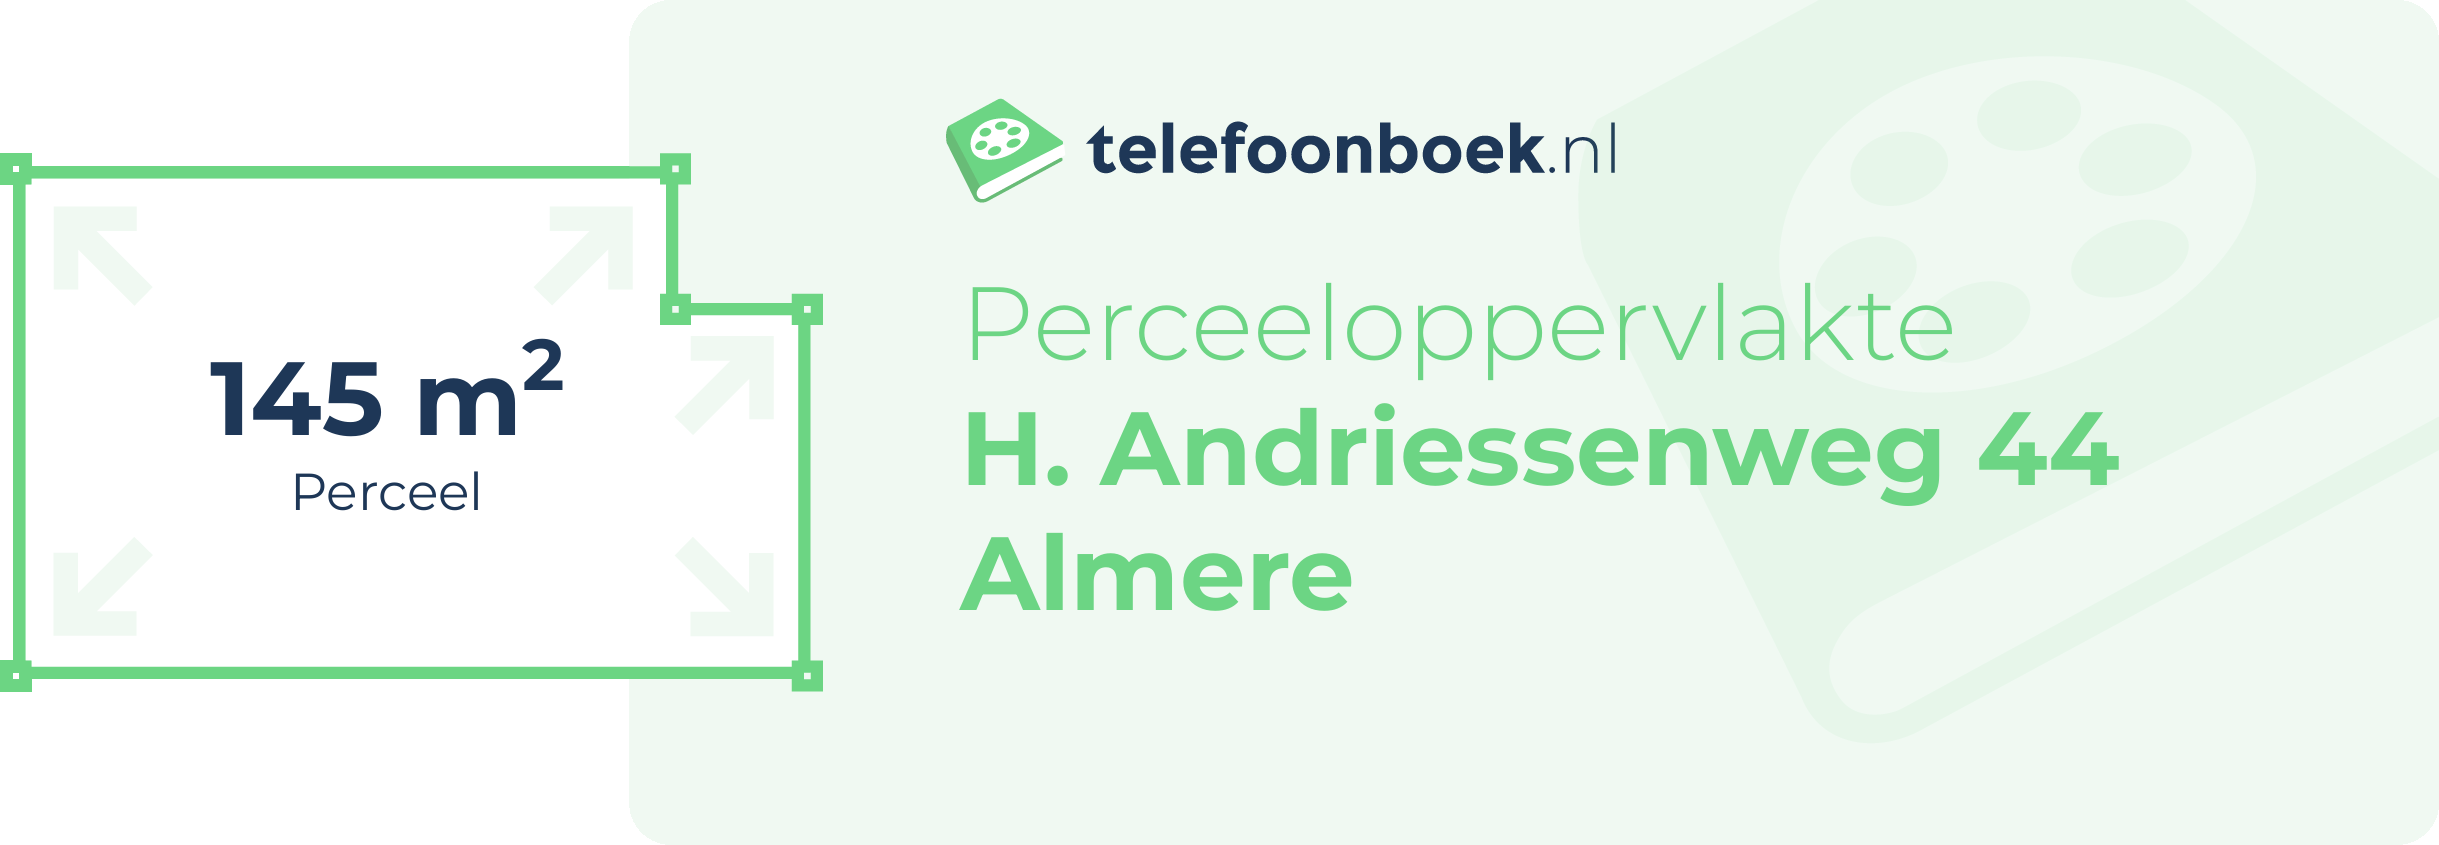 Perceeloppervlakte H. Andriessenweg 44 Almere